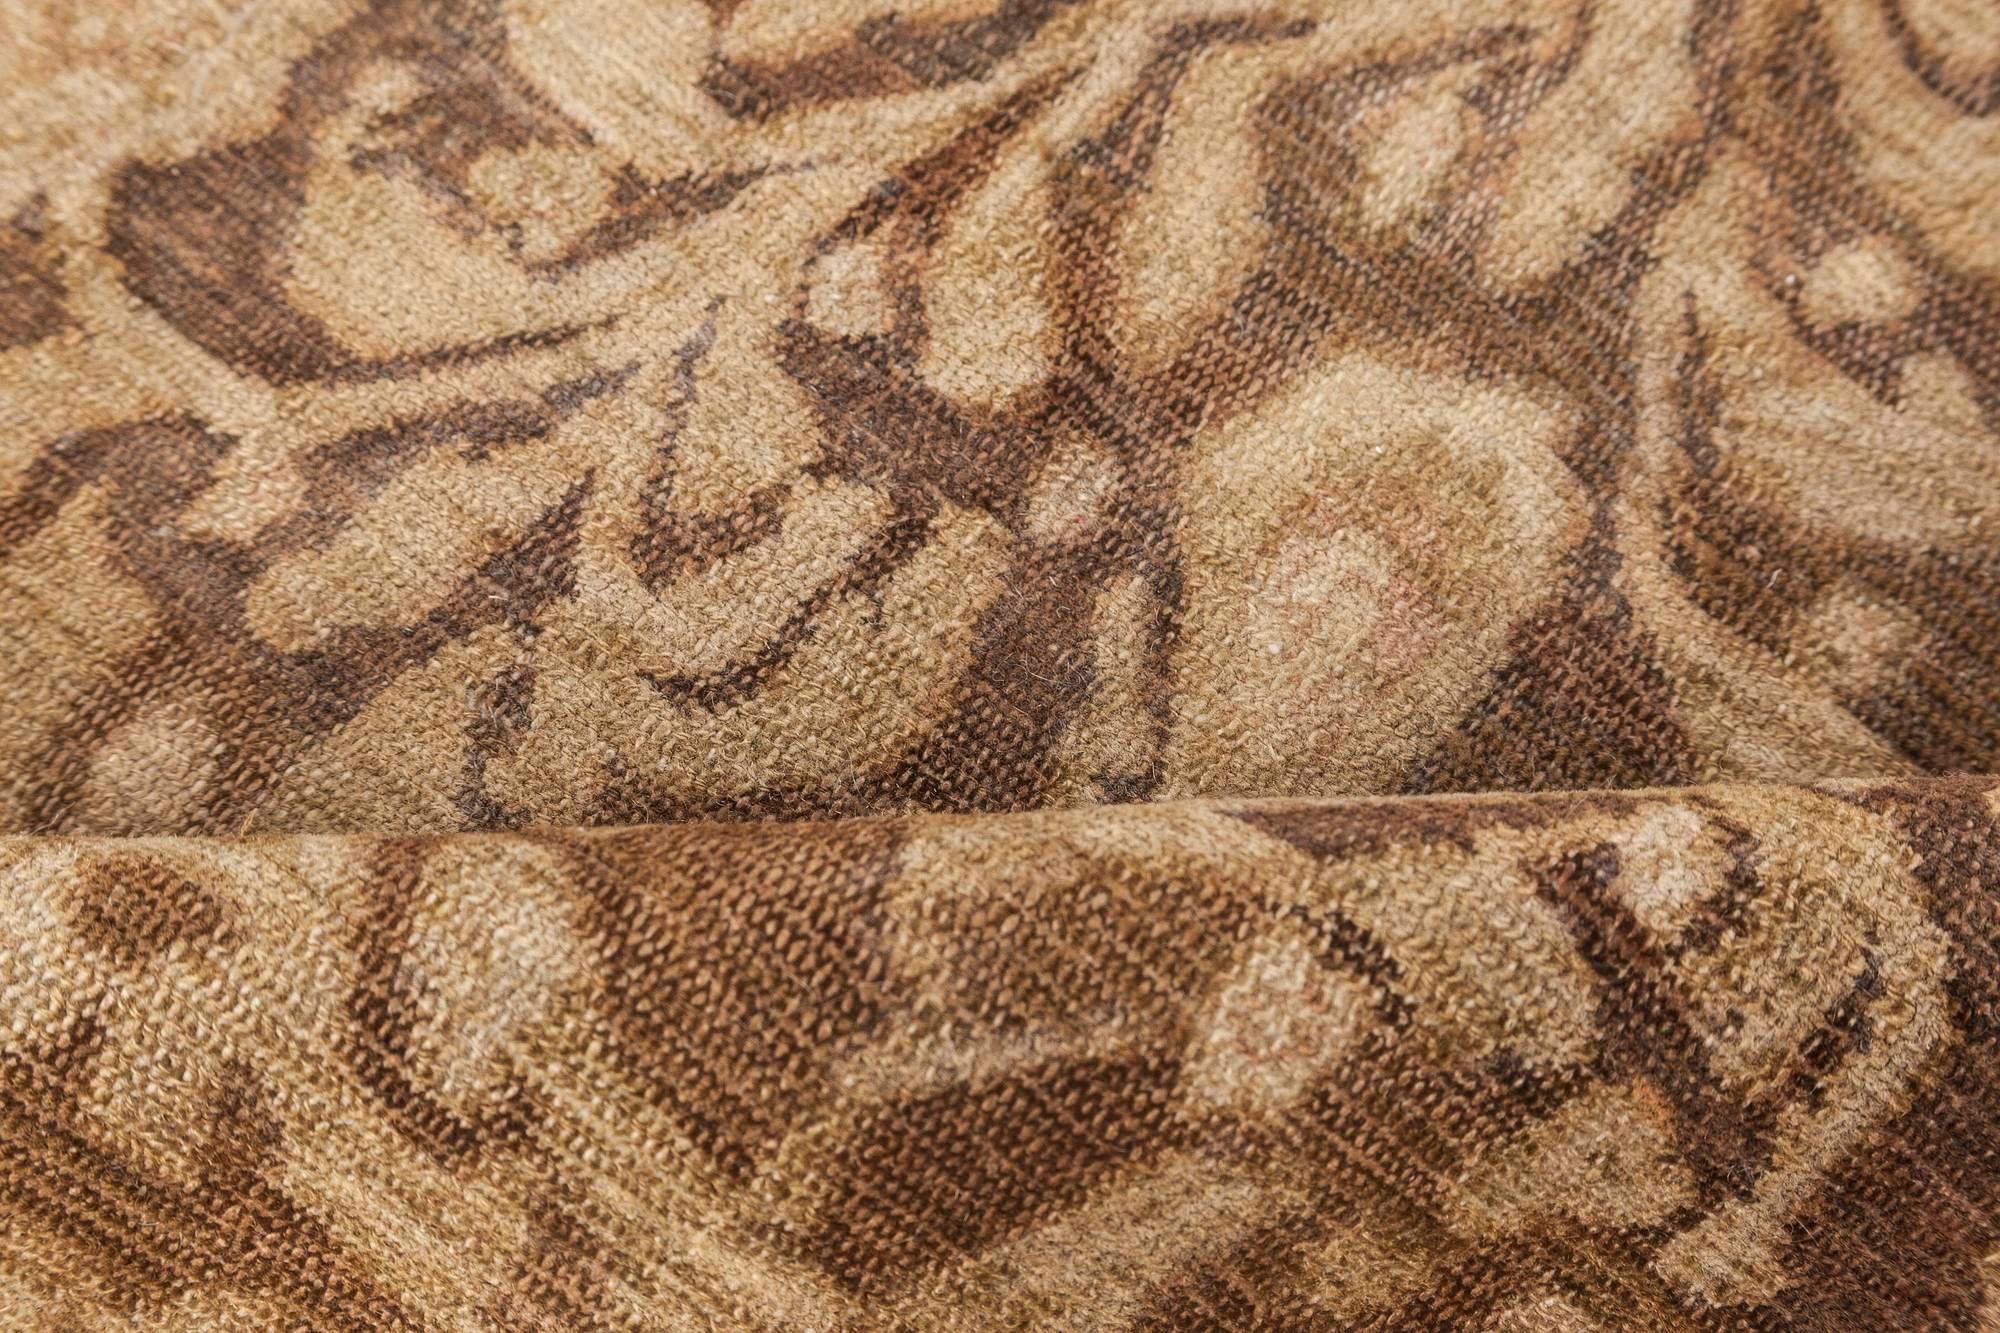 19th century Senneh Persian brown handmade wool rug
Size: 6'6